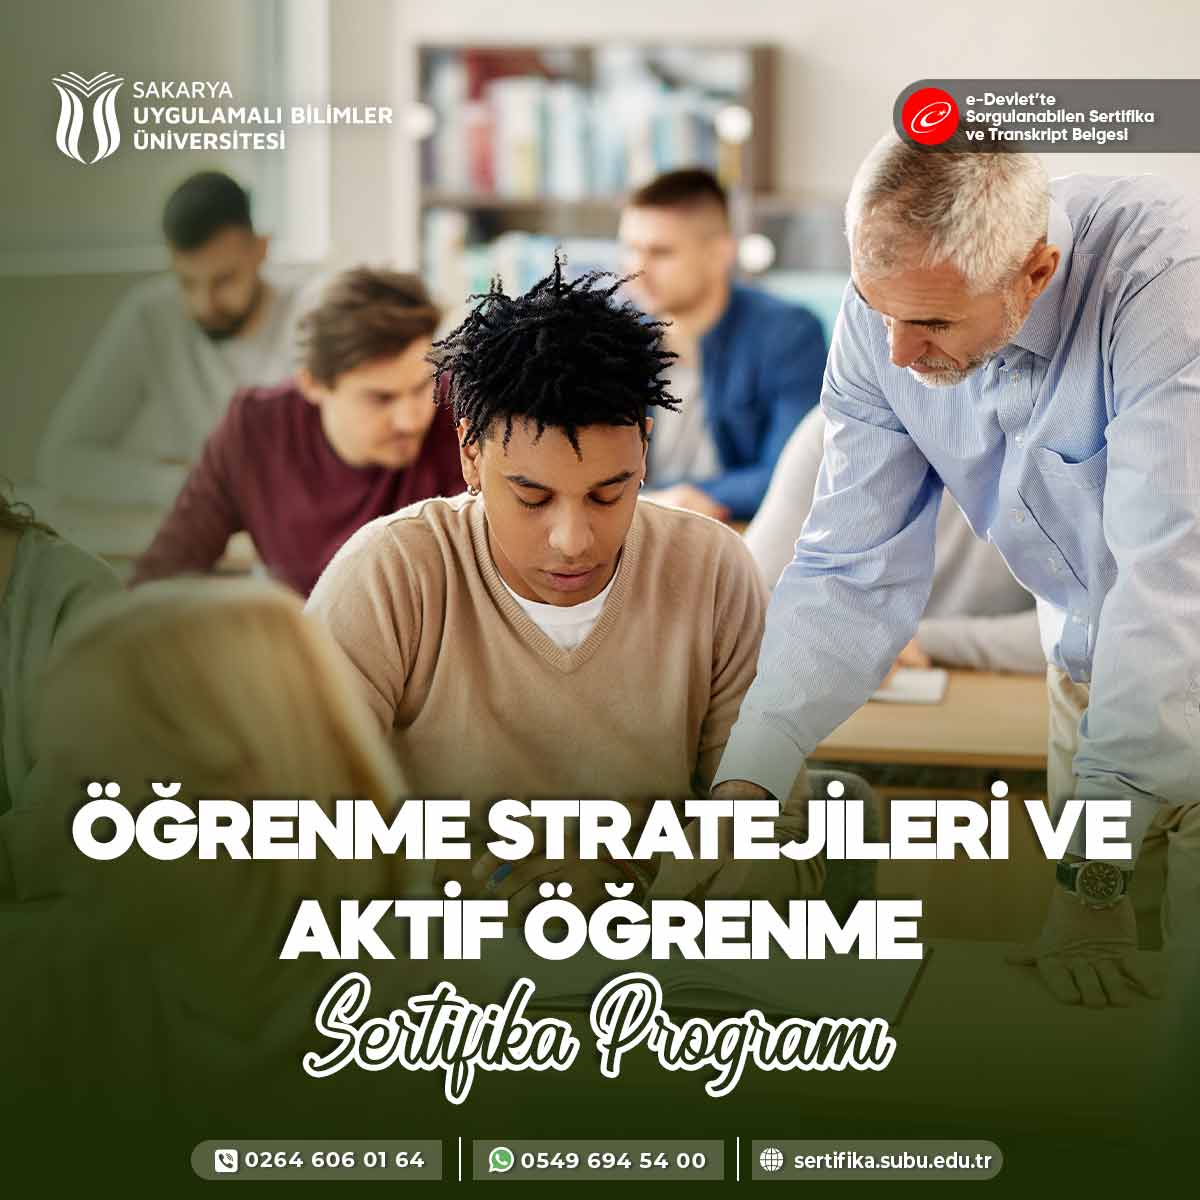 Öğrenme Stratejileri ve Aktif Öğrenme Sertifika Programı